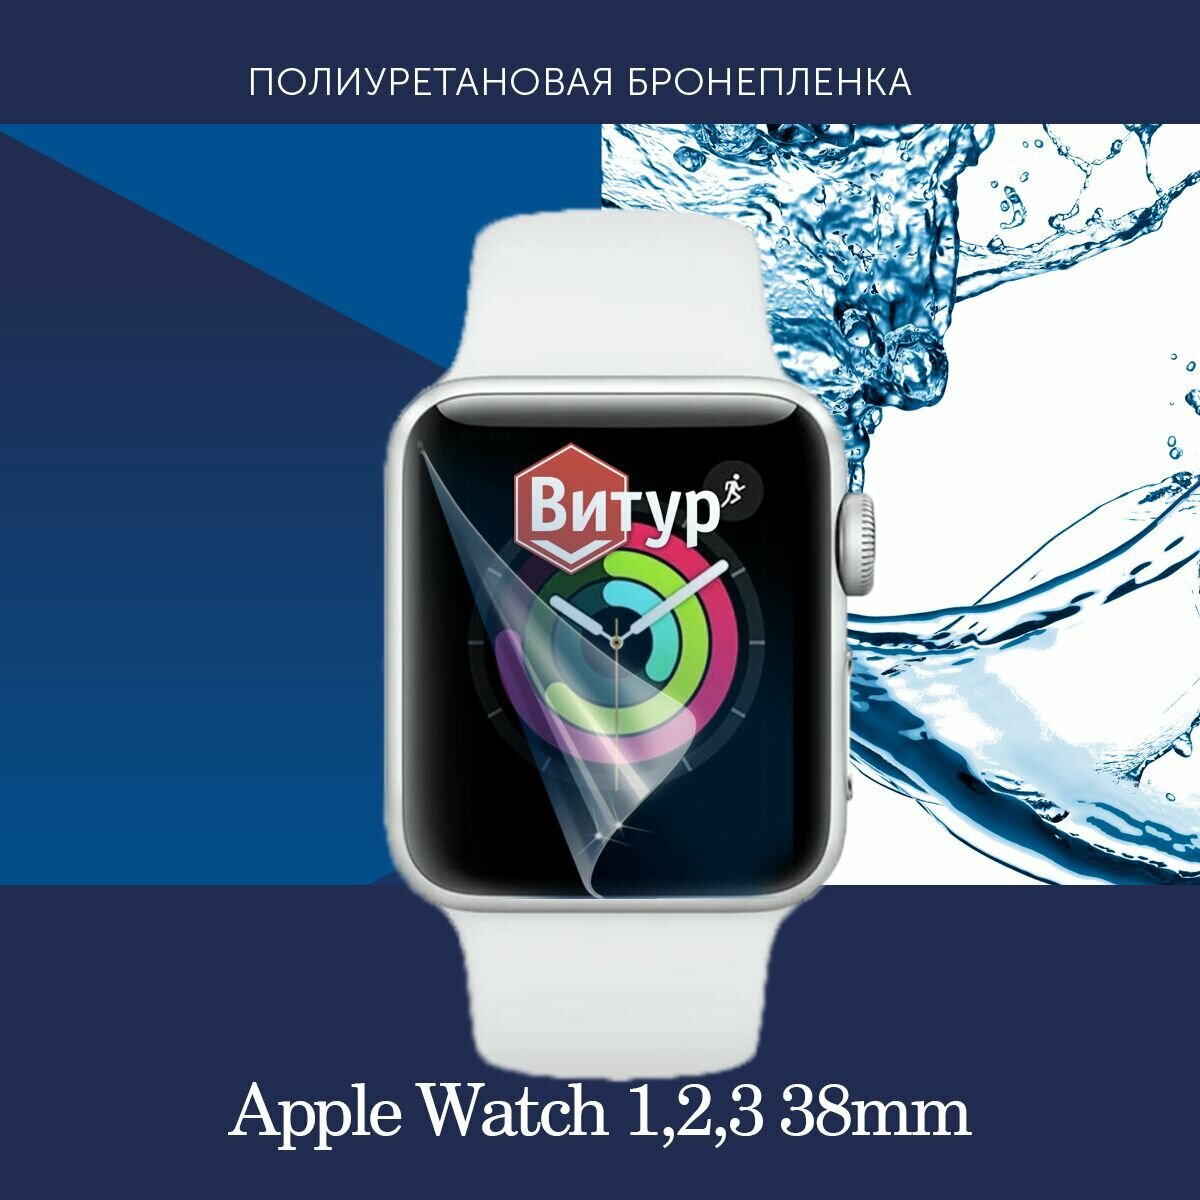 Полиуретановая бронепленка для смарт часов Apple Watch 1, 2, 3 38mm / Защитная пленка для Эпл Вотч 38мм / Глянцевая